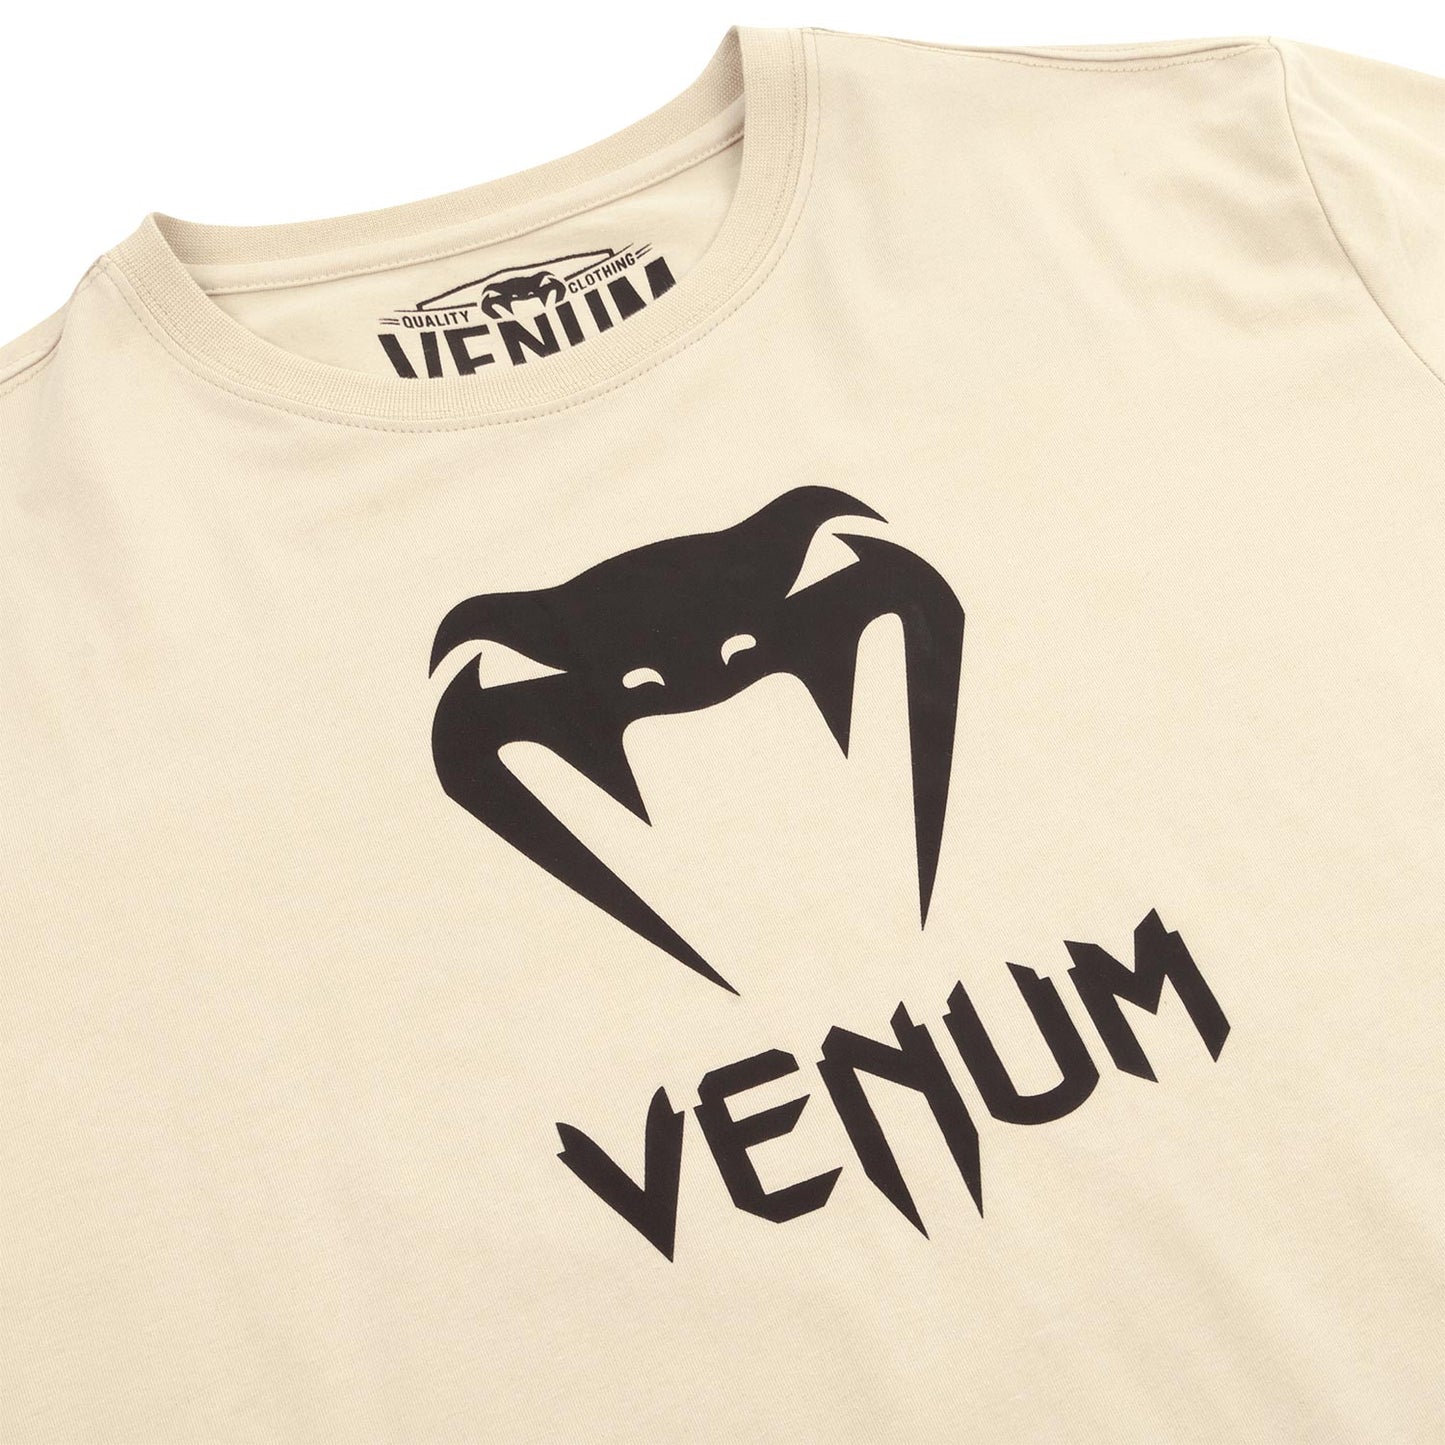 Venum Classic T-shirt - Sand/Black